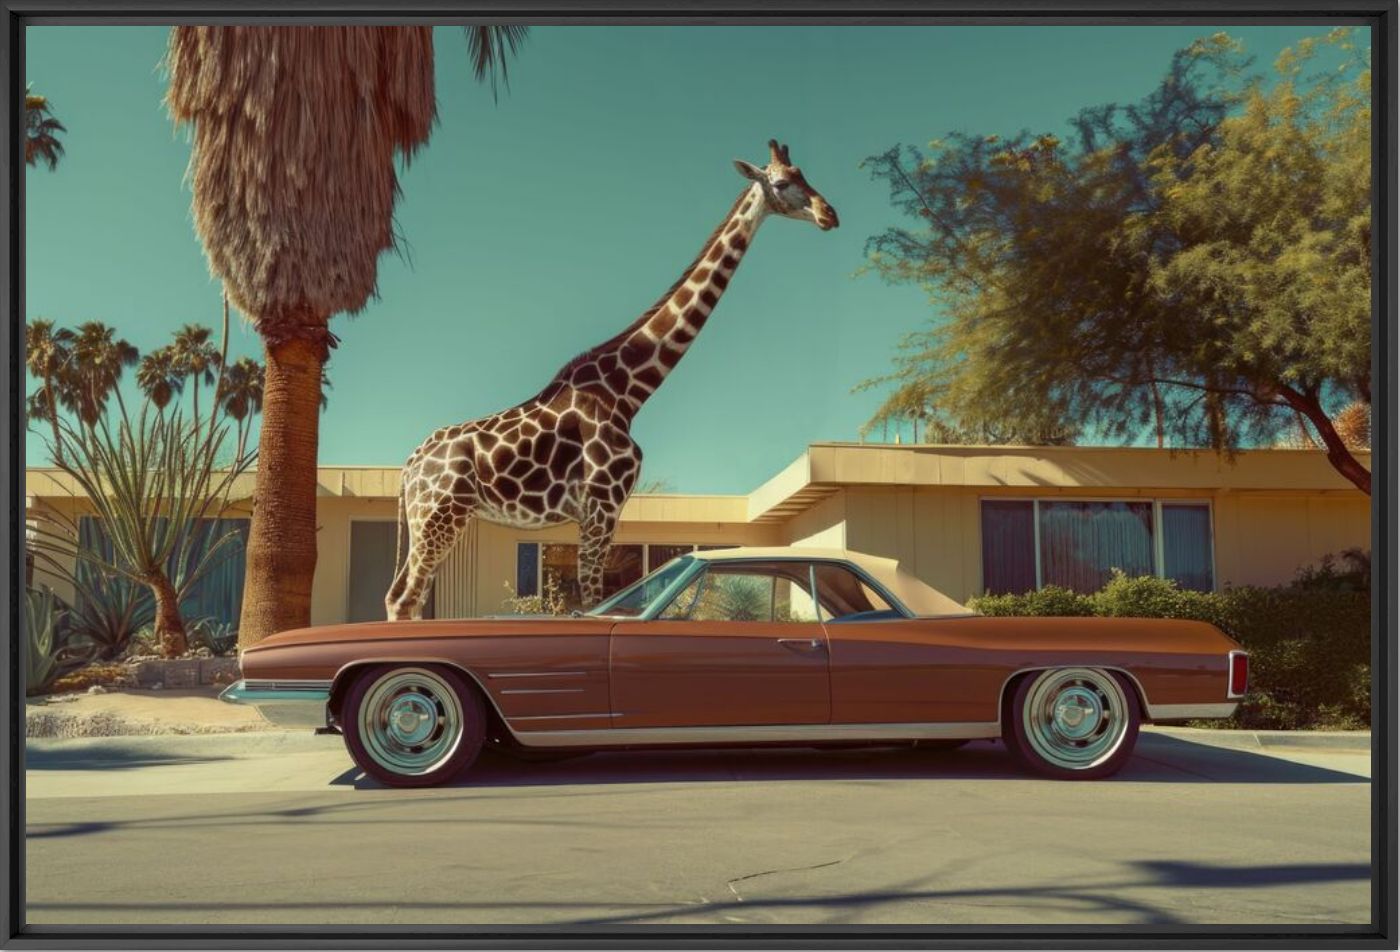 Fotografia Drive my car - Alexandre FAUVE - Pittura di immagini